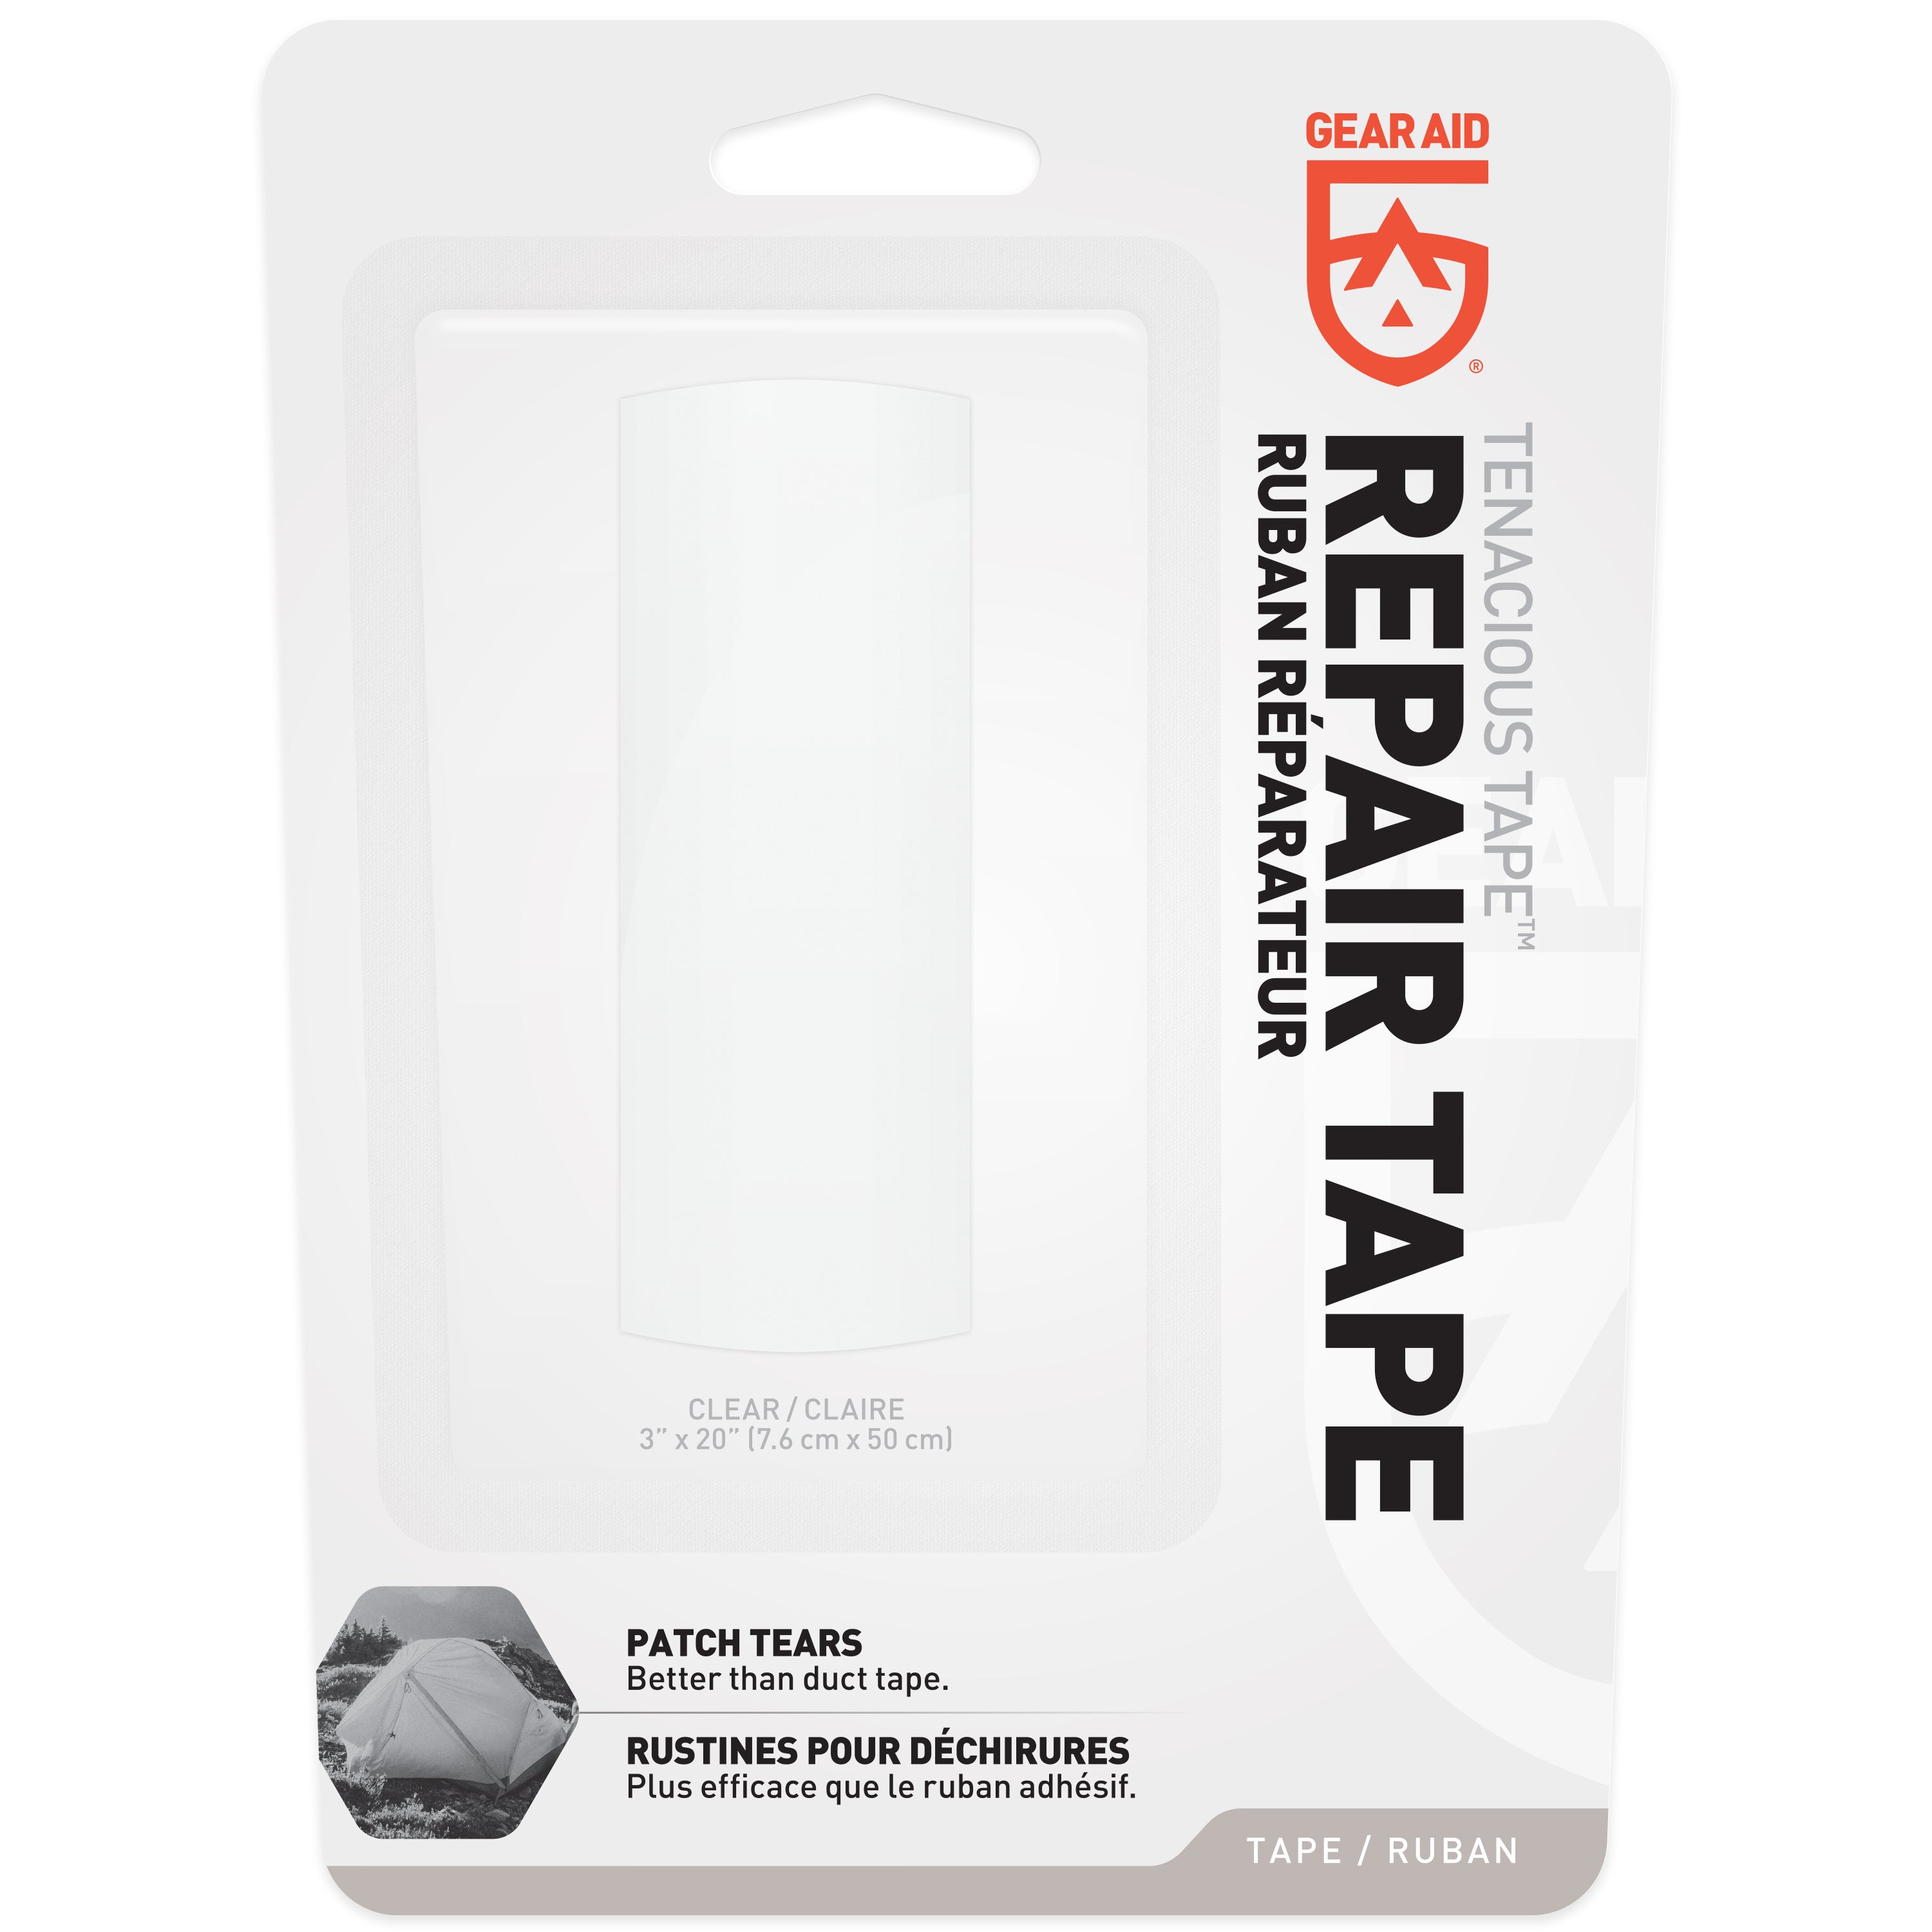 Gear Aid Tenacious Tape Roll in packaging